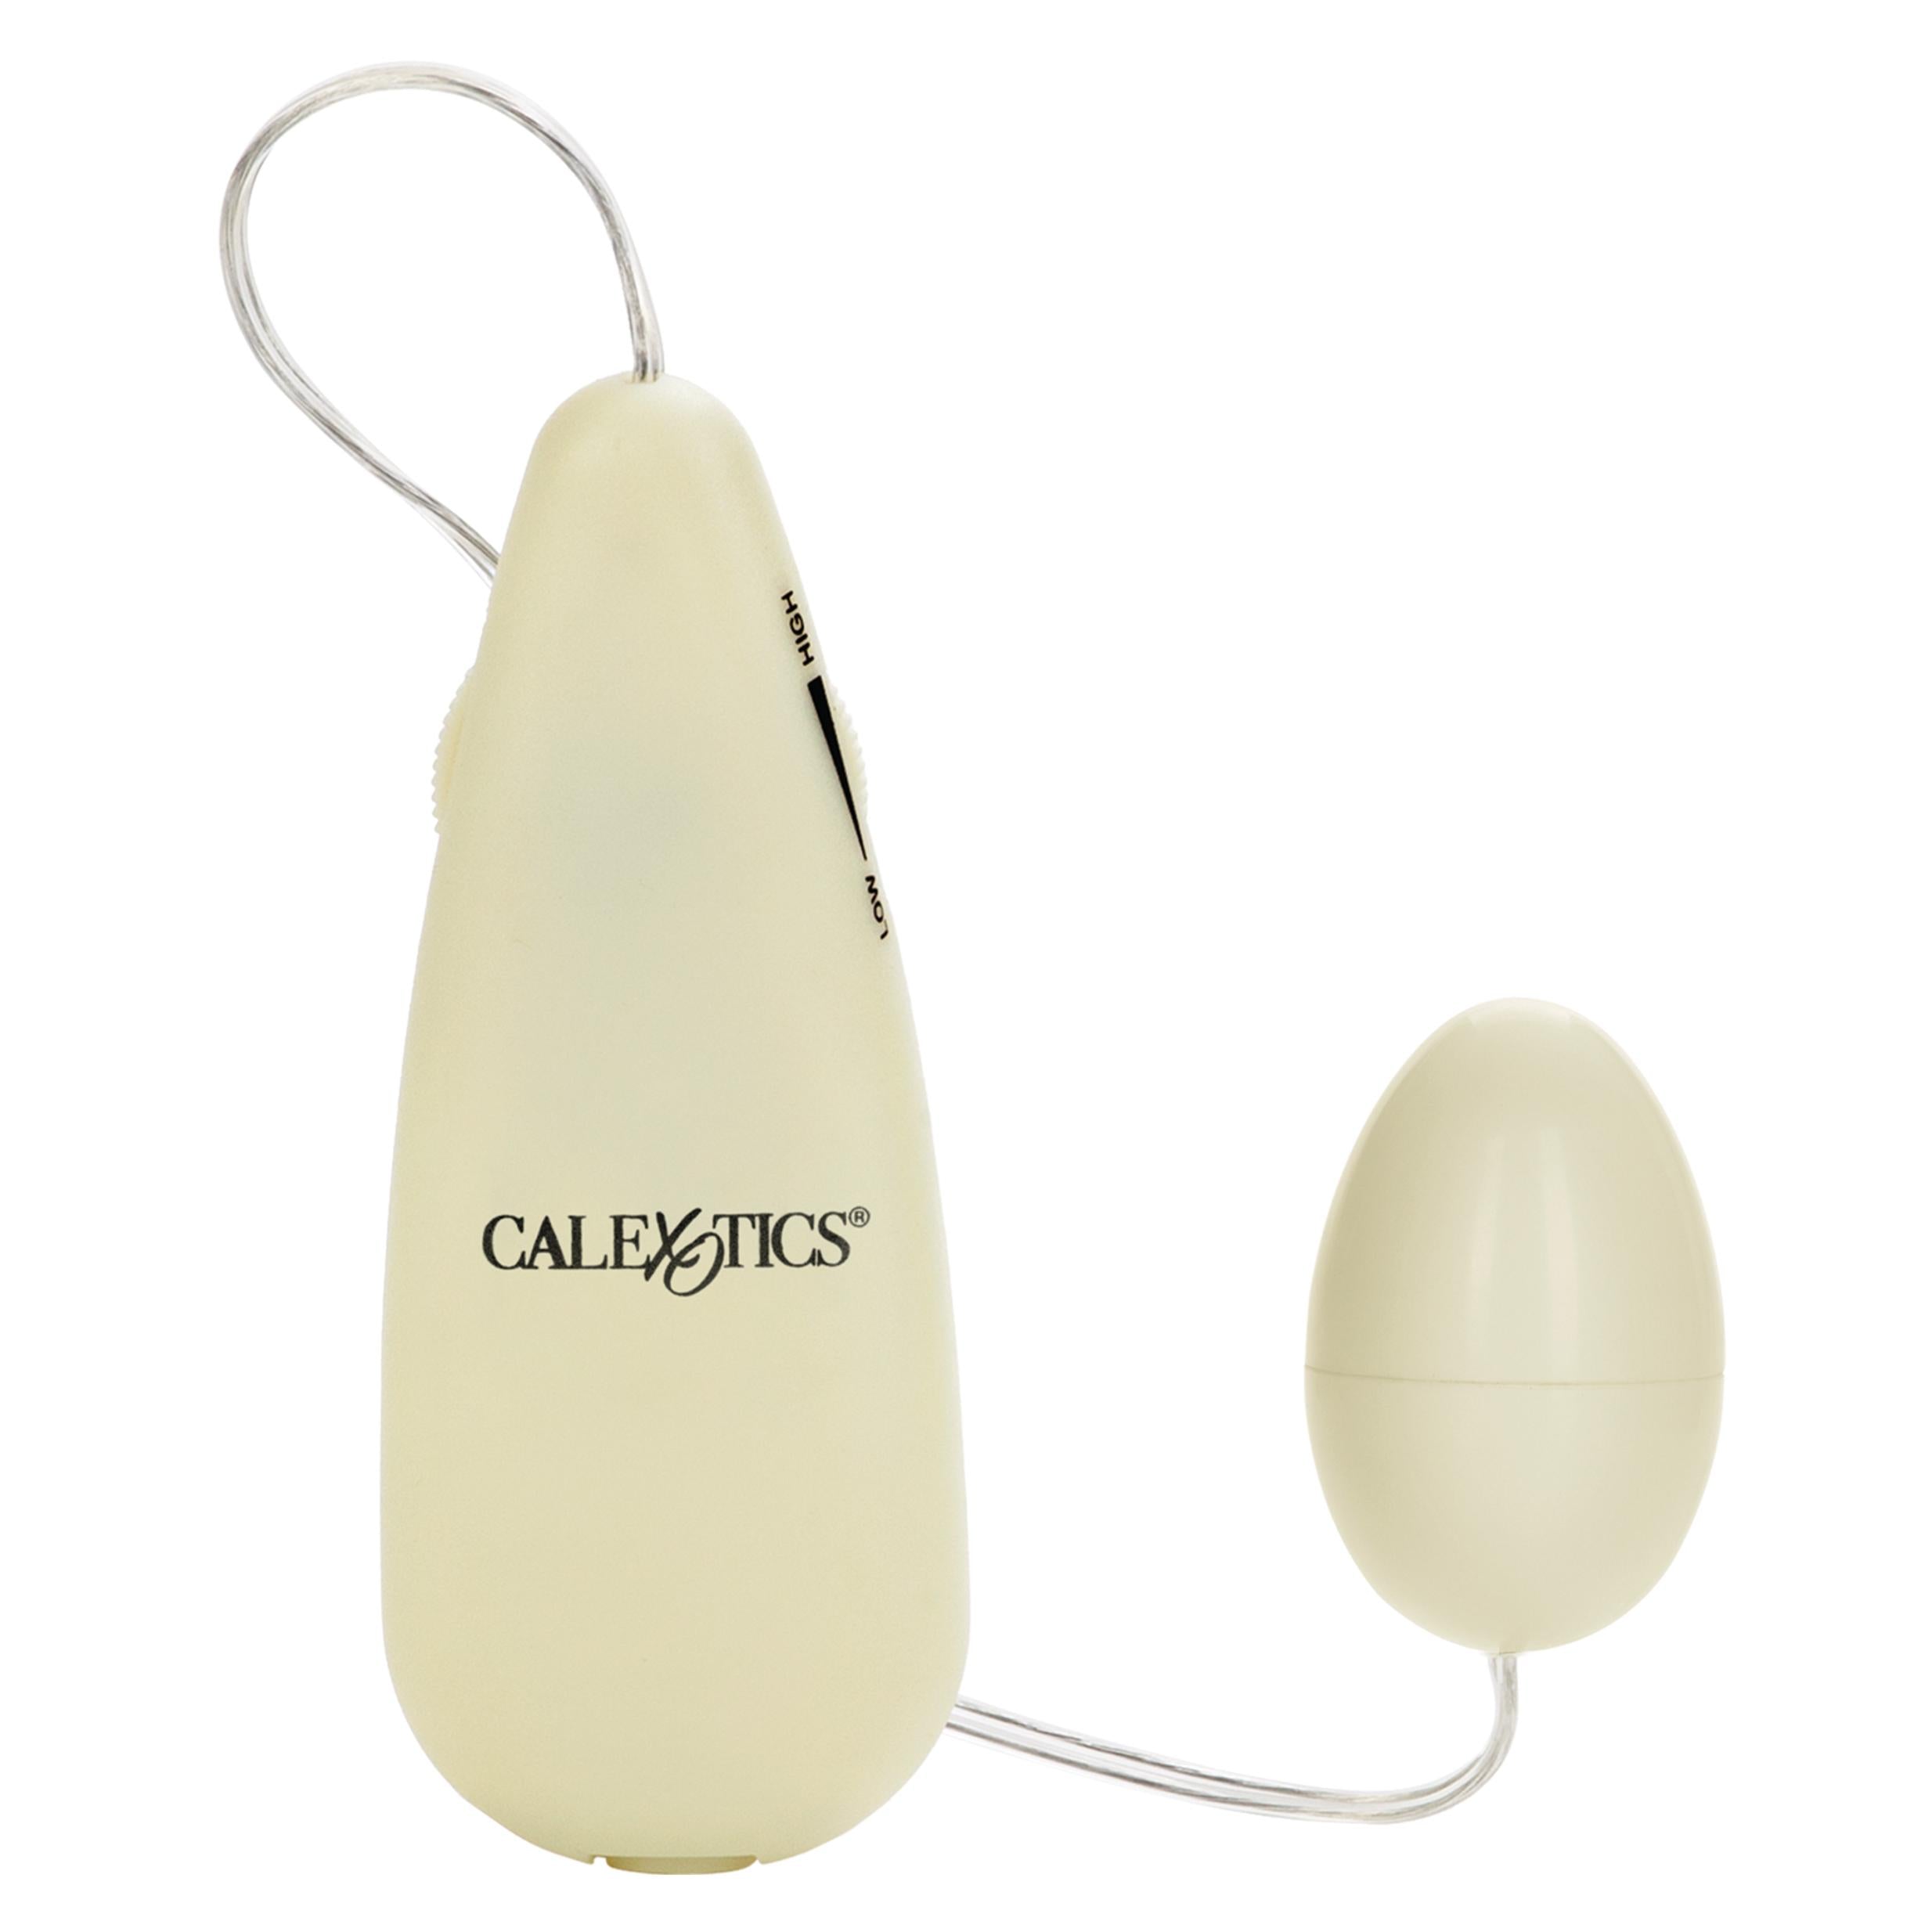 CalExotic's Glow-in-the-Dark Vibrating Egg